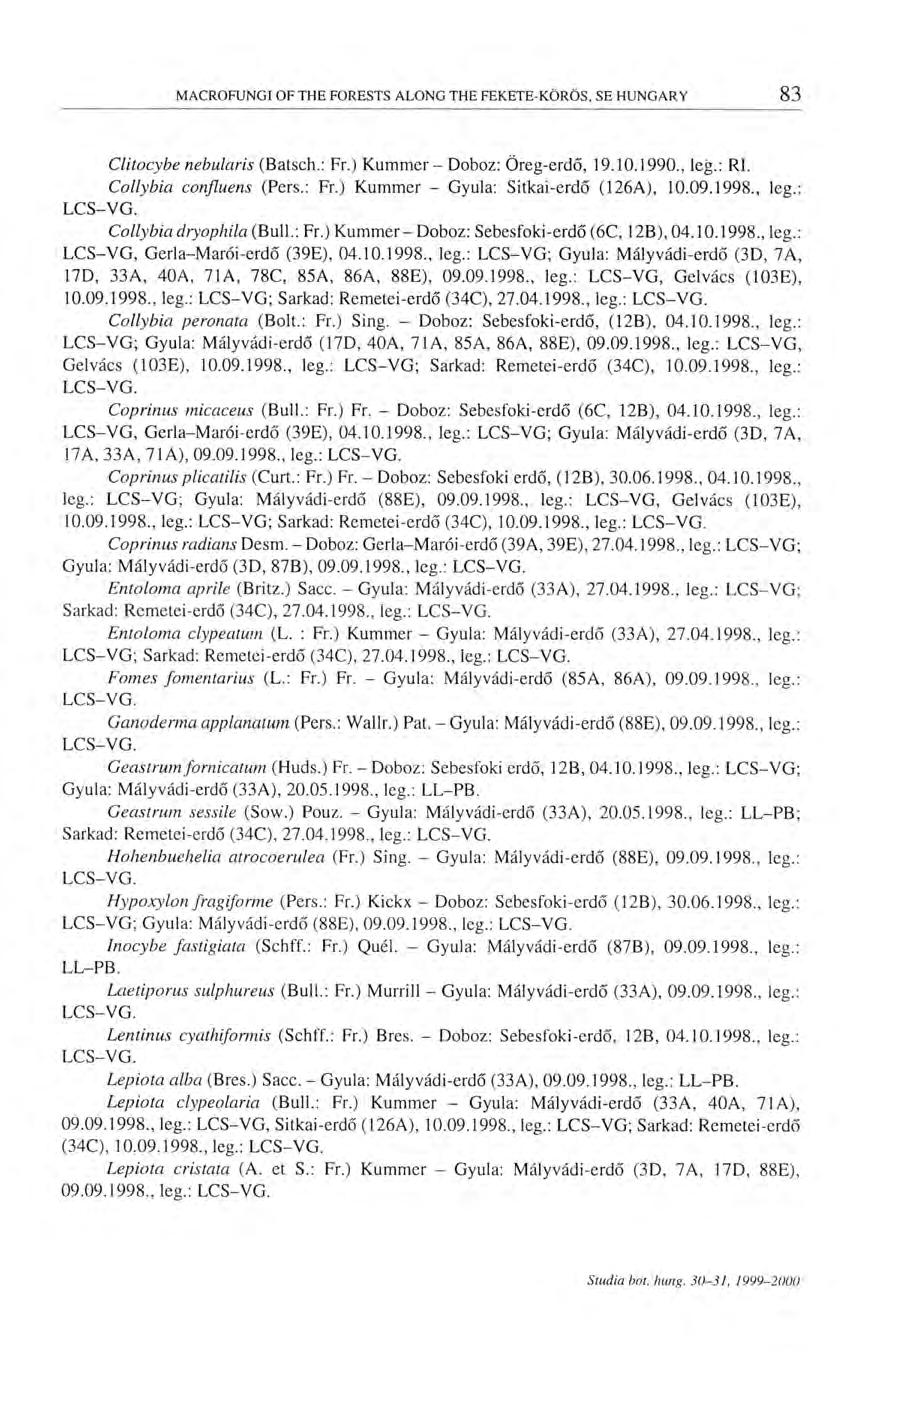 Clitocybe nebularis (Batsch.: Fr.) Kummer- Doboz: Öreg-erdő, 19.10.1990., leg.: RI. Collybia confluens (Pers.: Fr.) Kummer - Gyula: Sitkai-erdő (126A), 10.09.1998., leg.: Collybiadryophila (Bull.: Fr.) Kummer- Doboz: Sebesfoki-erdő (6C, 12B), 04.